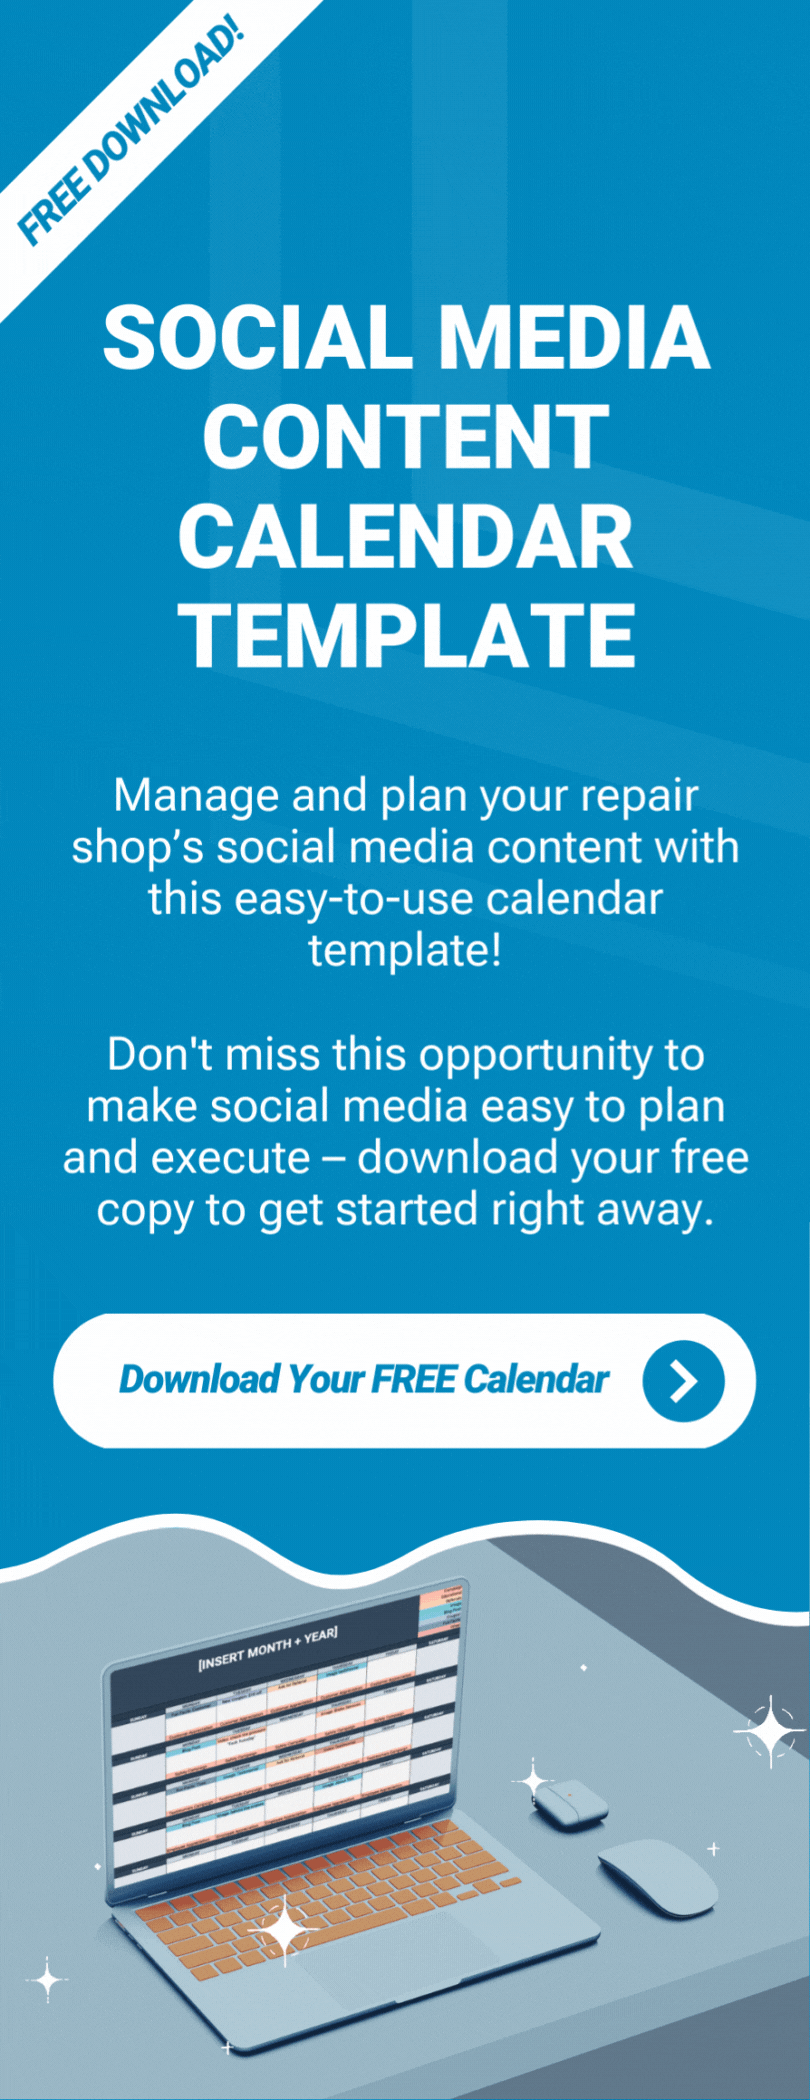 Social Media Content Calendar Template for Your Repair Shop